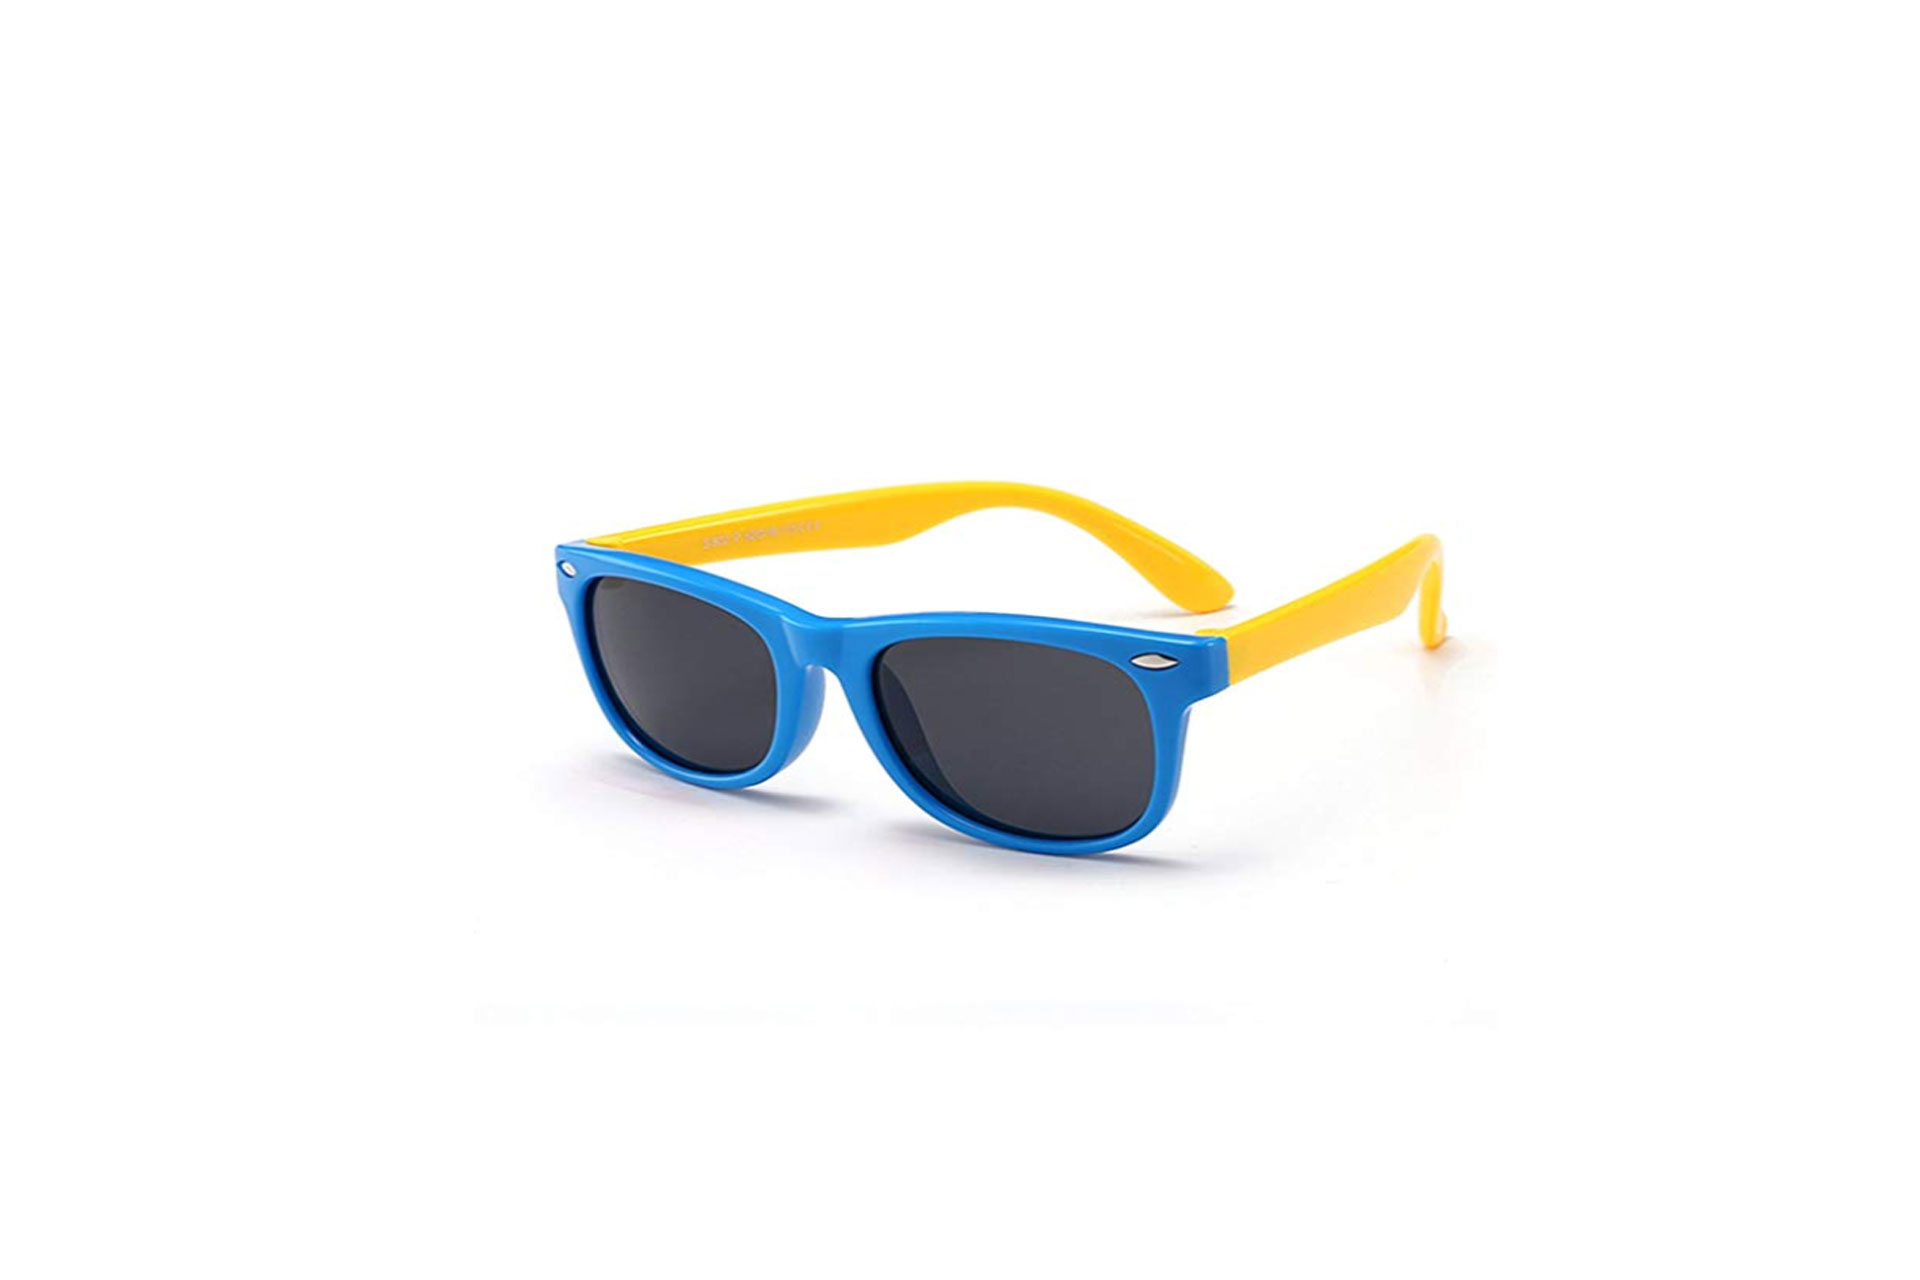 Kids' Sunglasses; Courtesy of Amazon